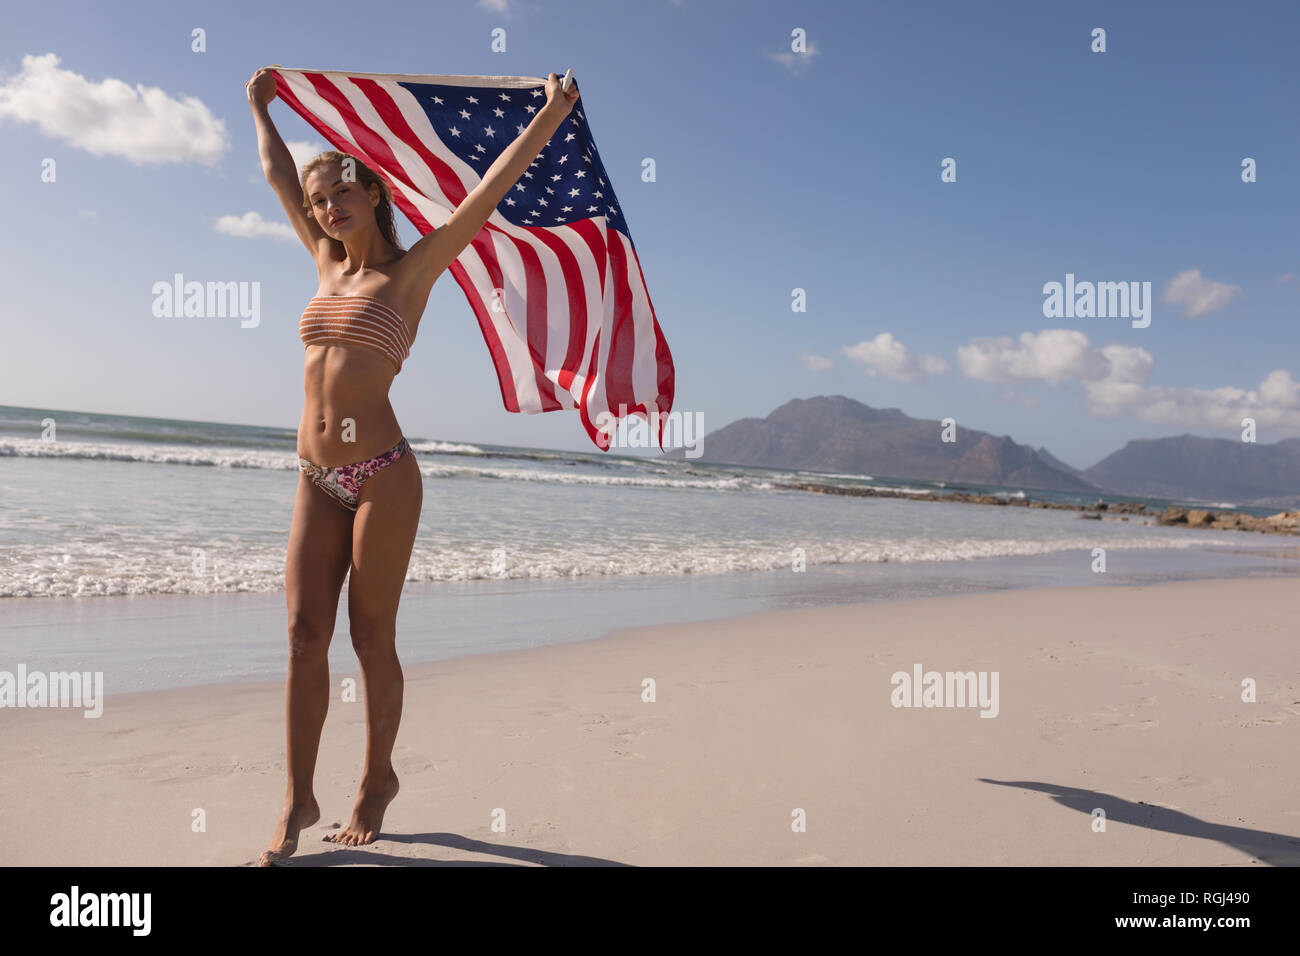 Woman waving American flag at beach Banque D'Images